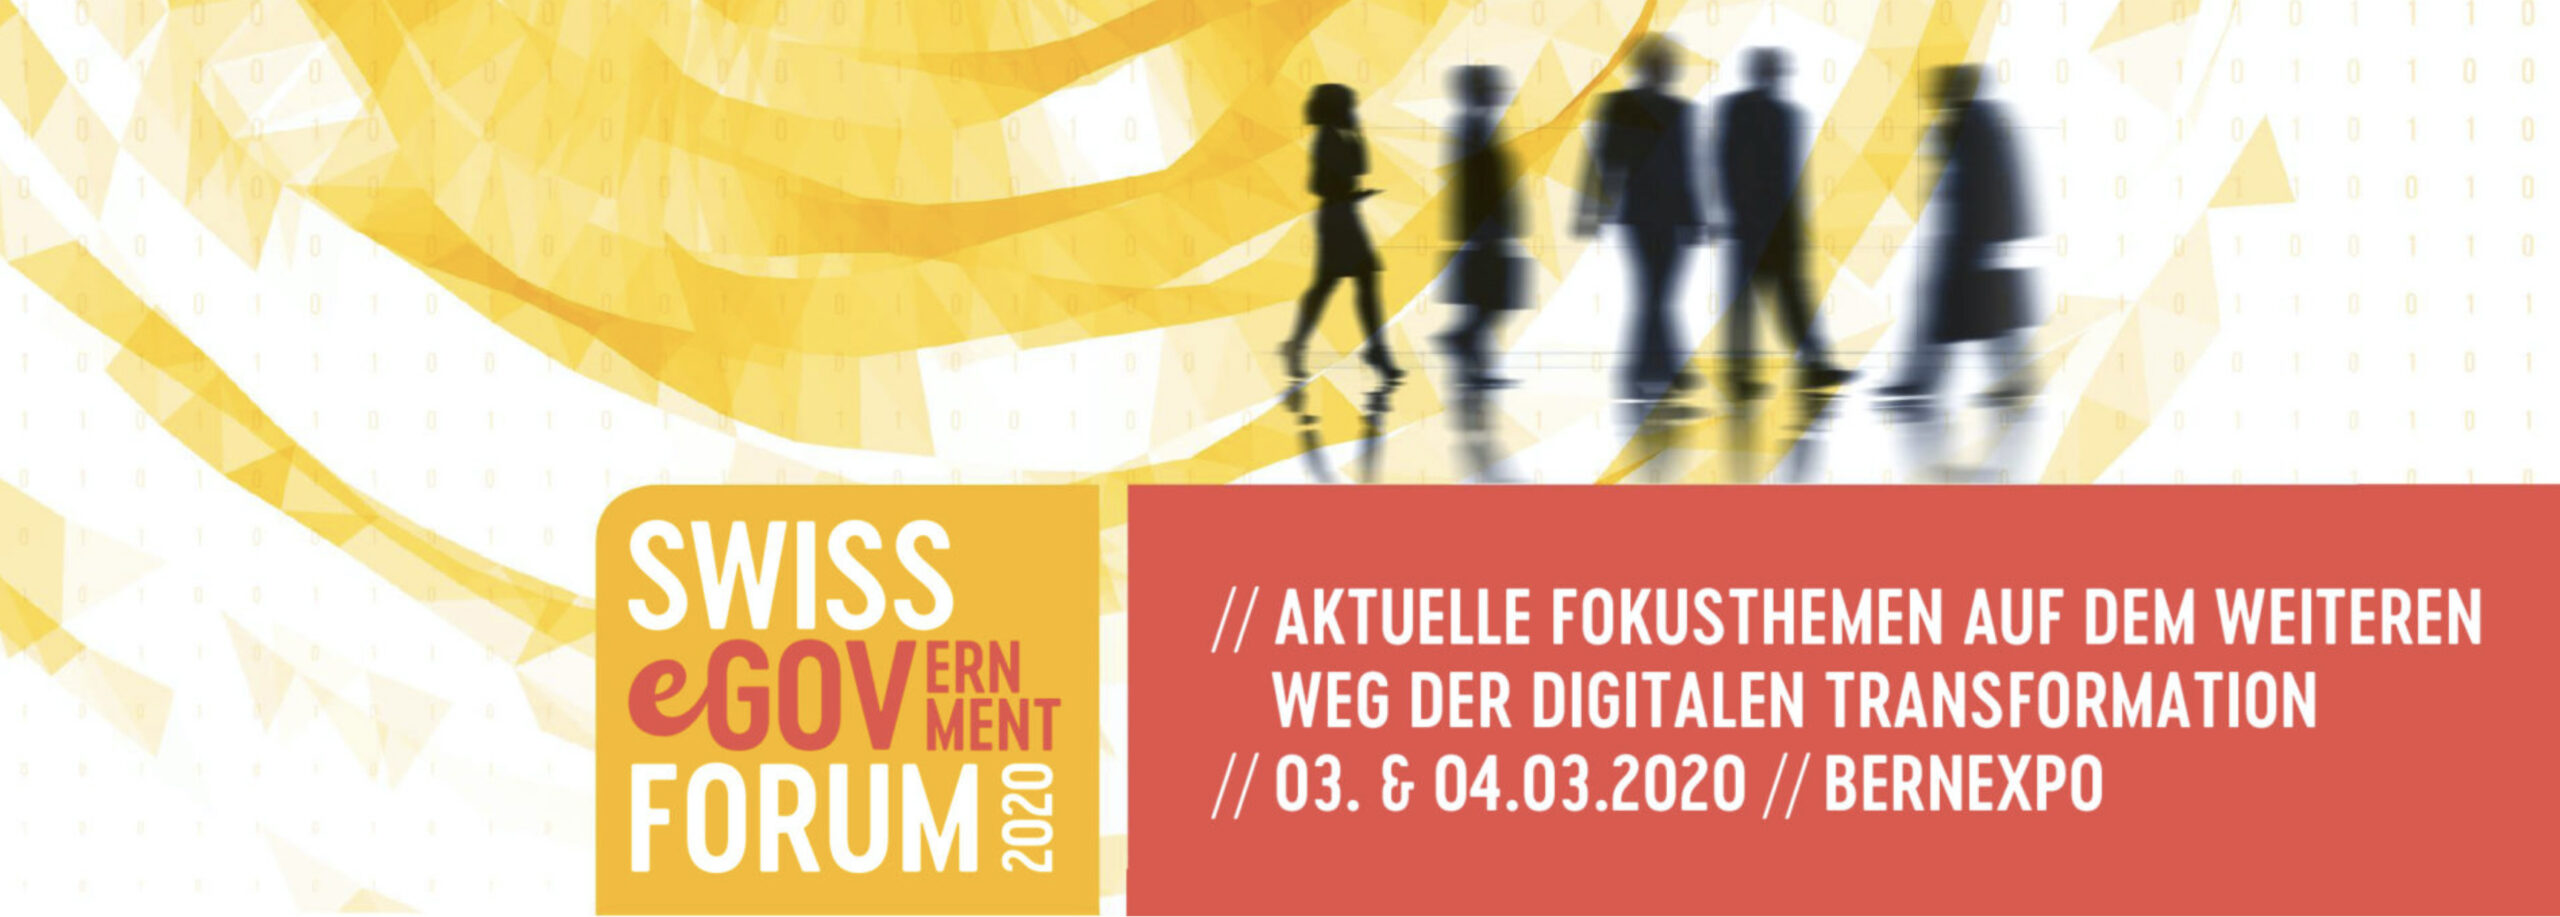 Swiss eGovernment forum 2020